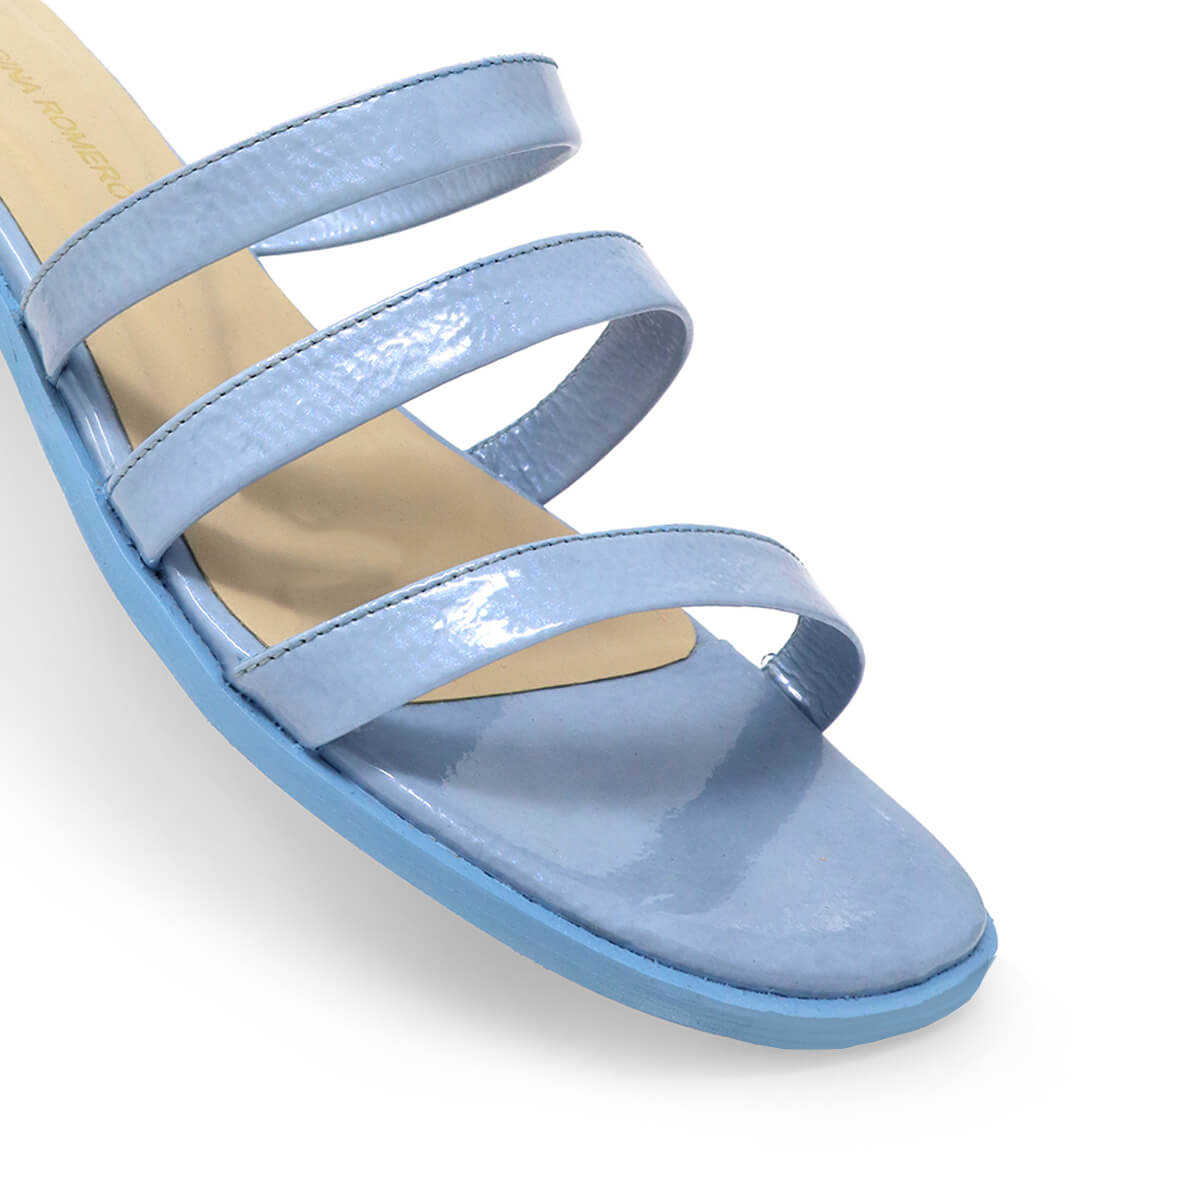 CILIA - Charol Azul Claro Regina Romero Zapato Sandalia de Piso Para Dama en Piel